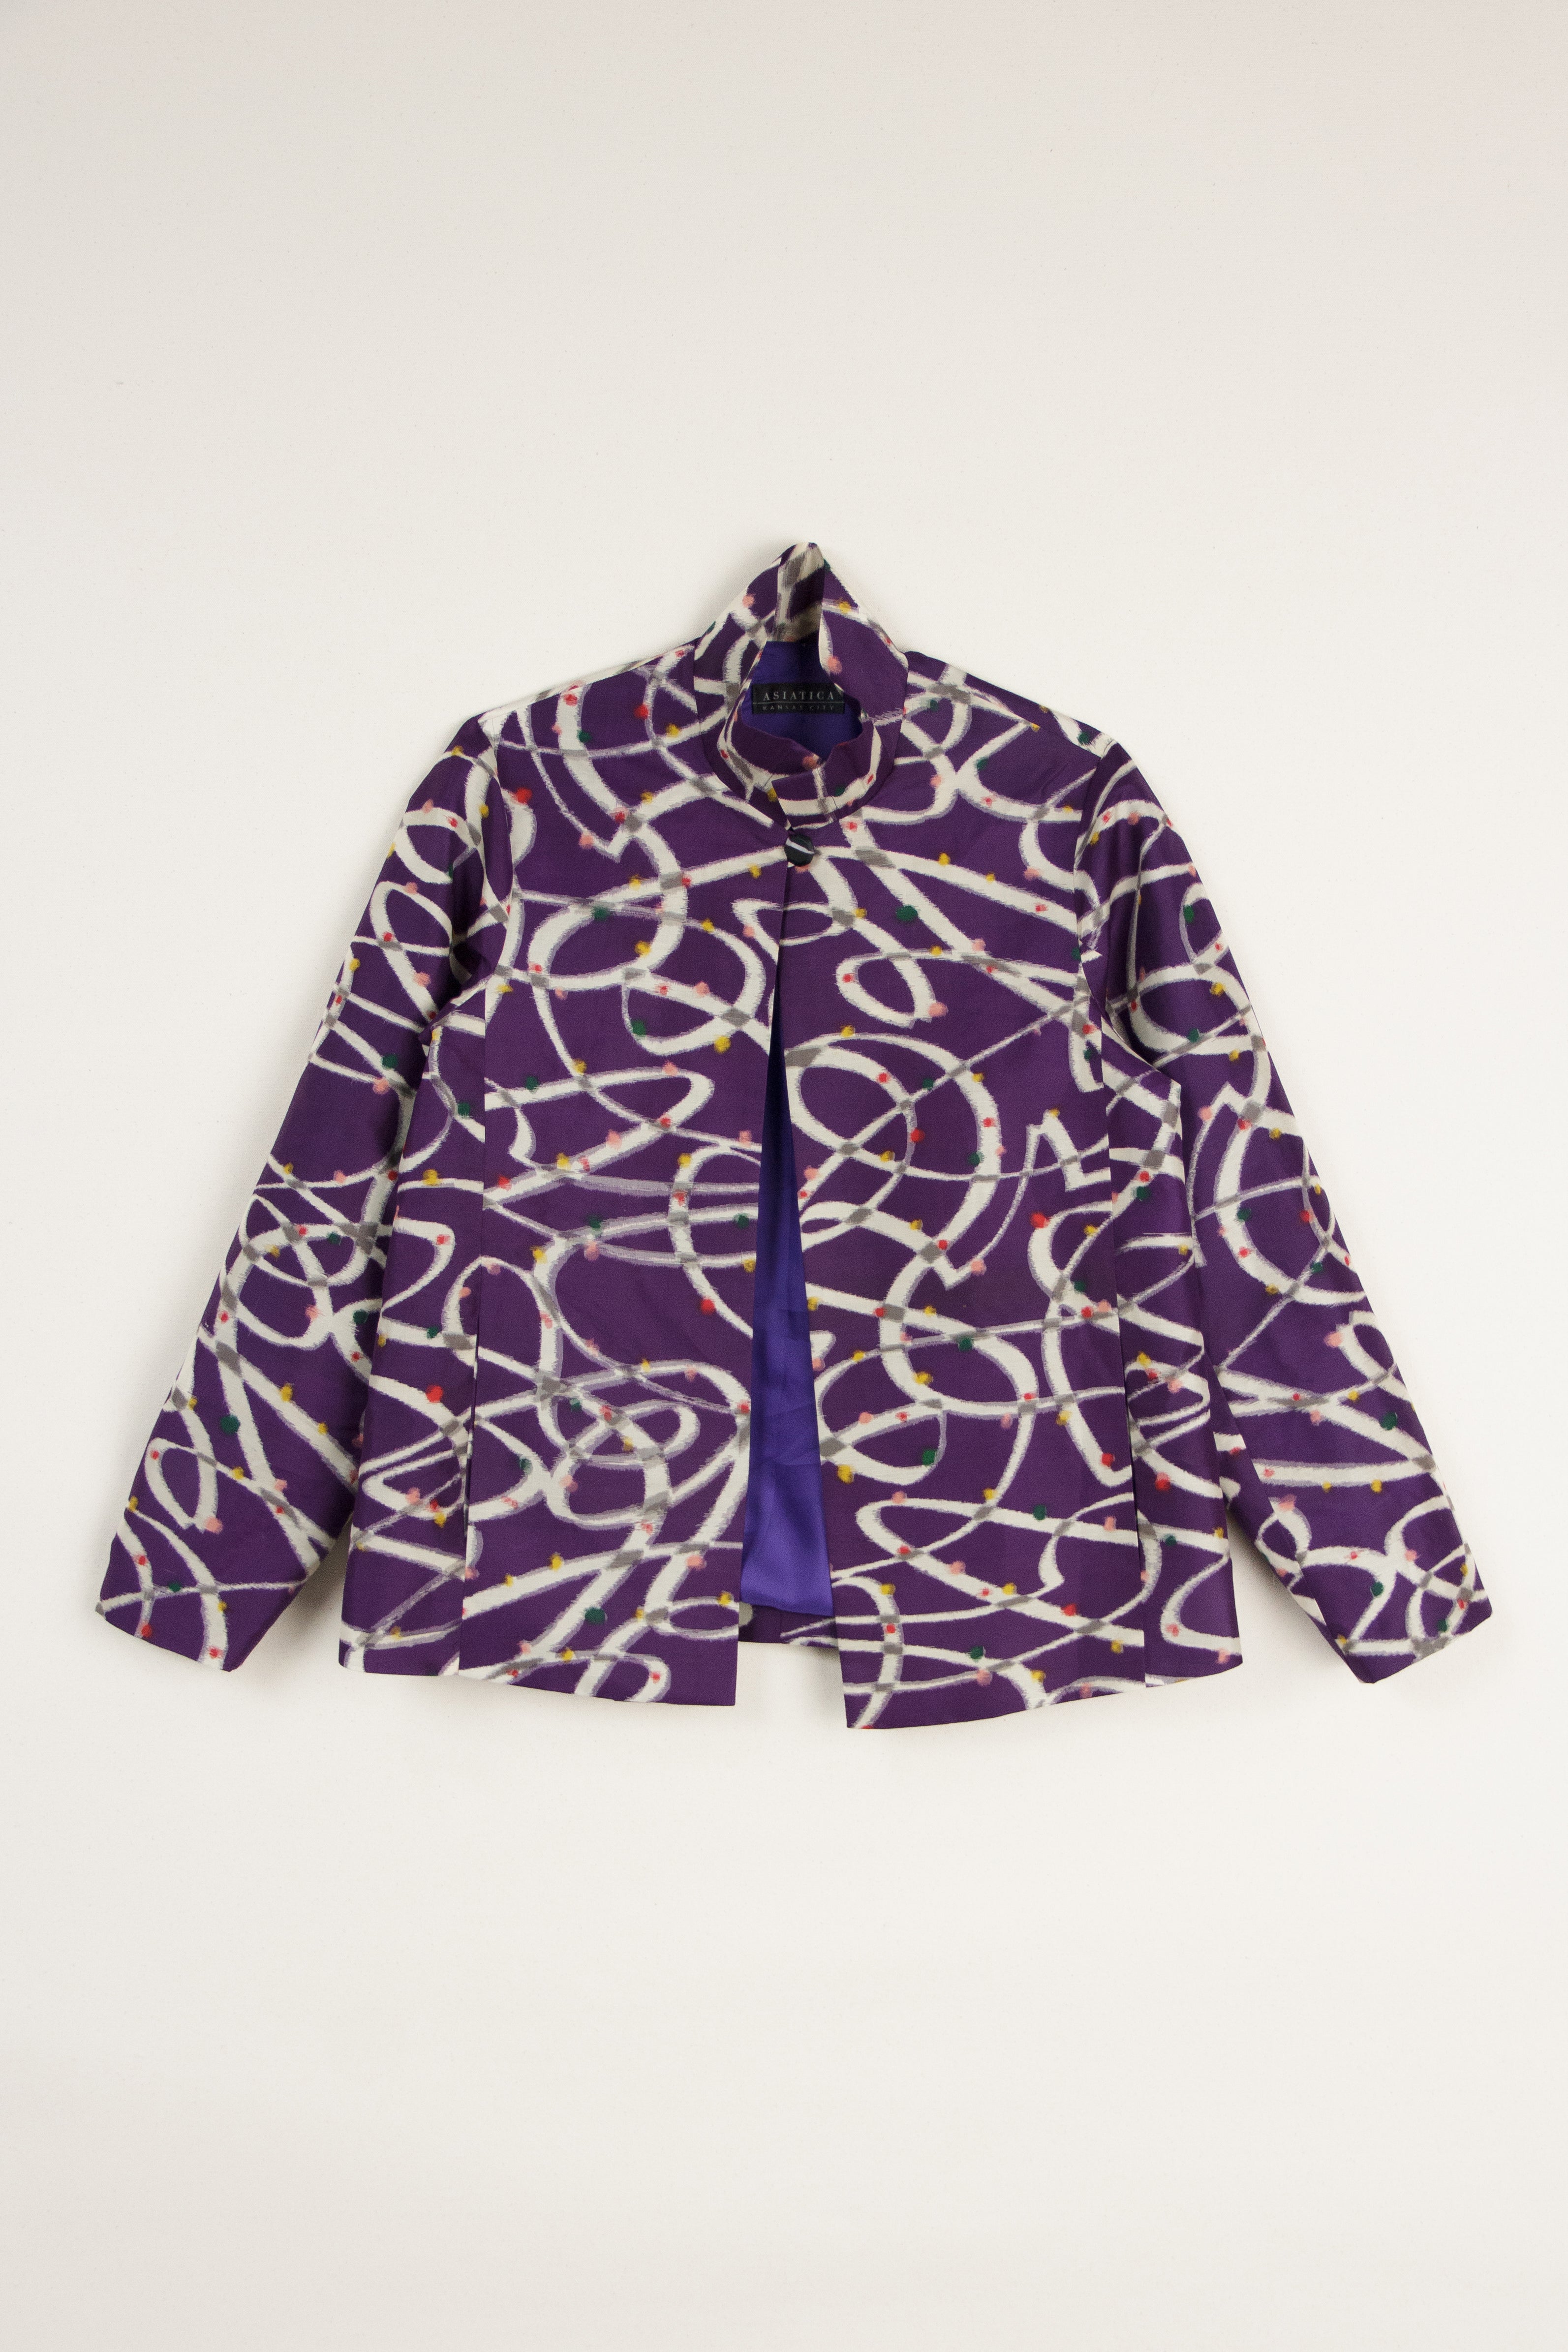 Omni Jacket in Vintage Japanese Silk Ikat